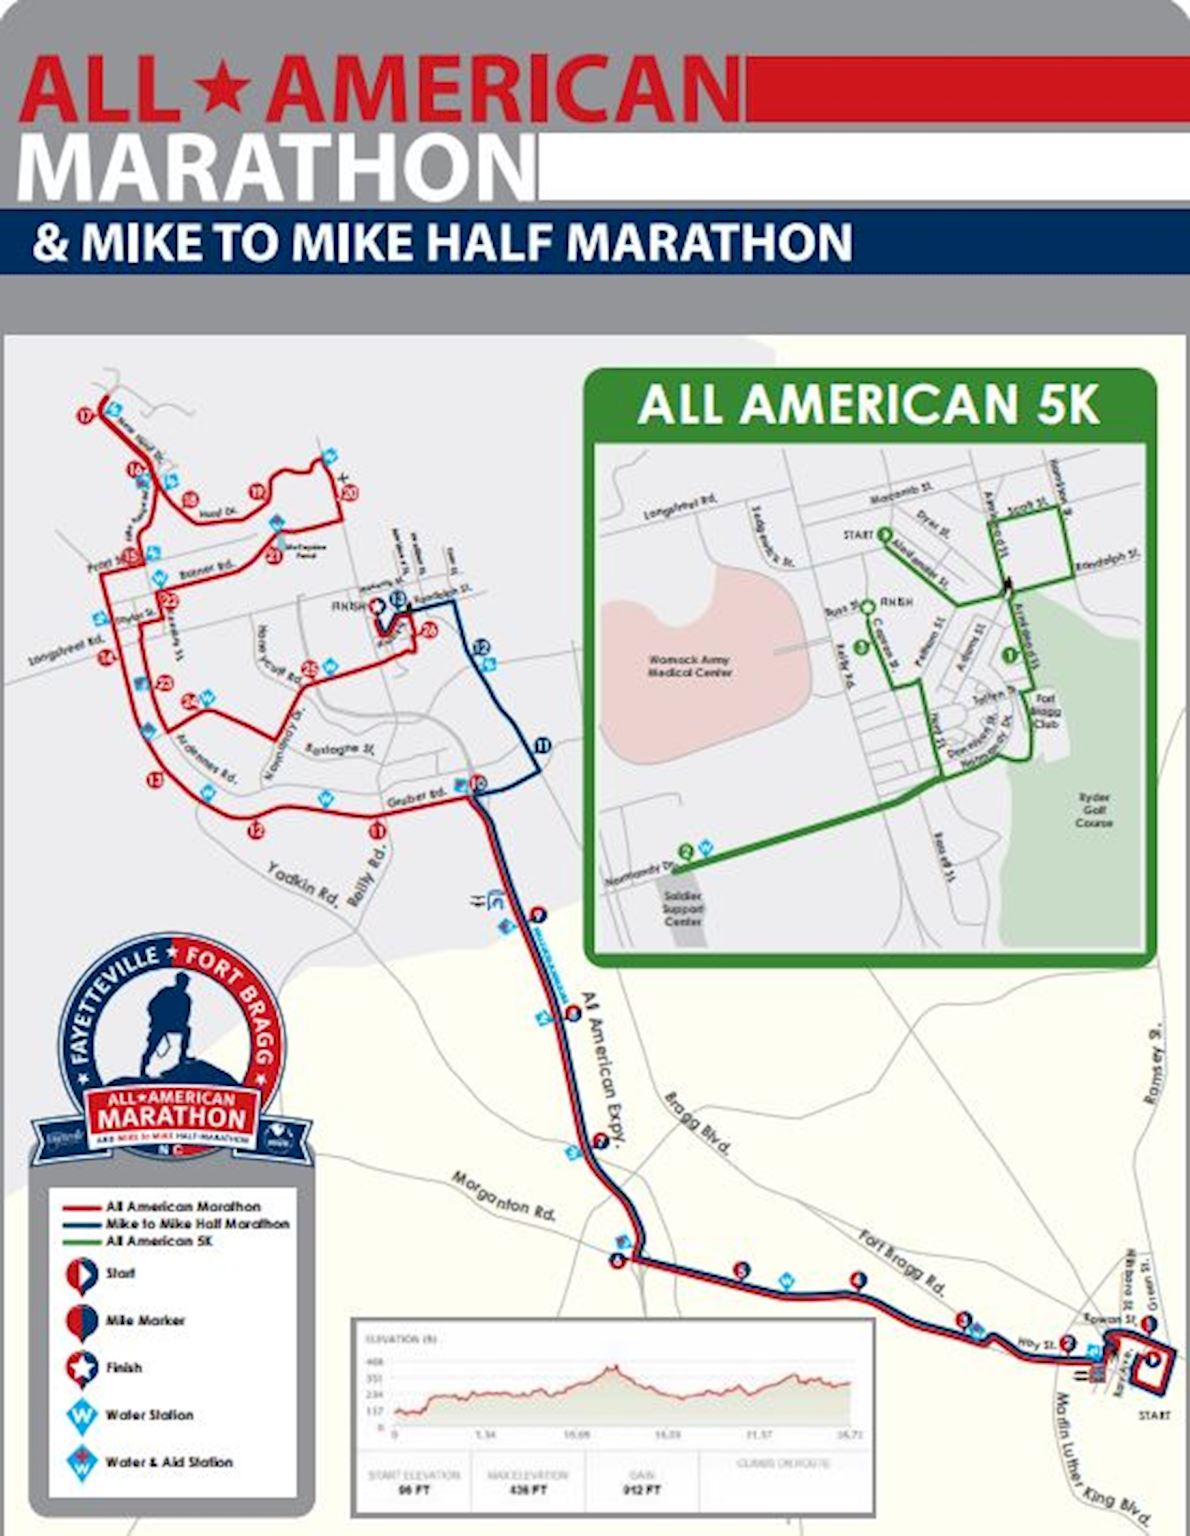 All American Marathon & Mike to Mike Half Marathon